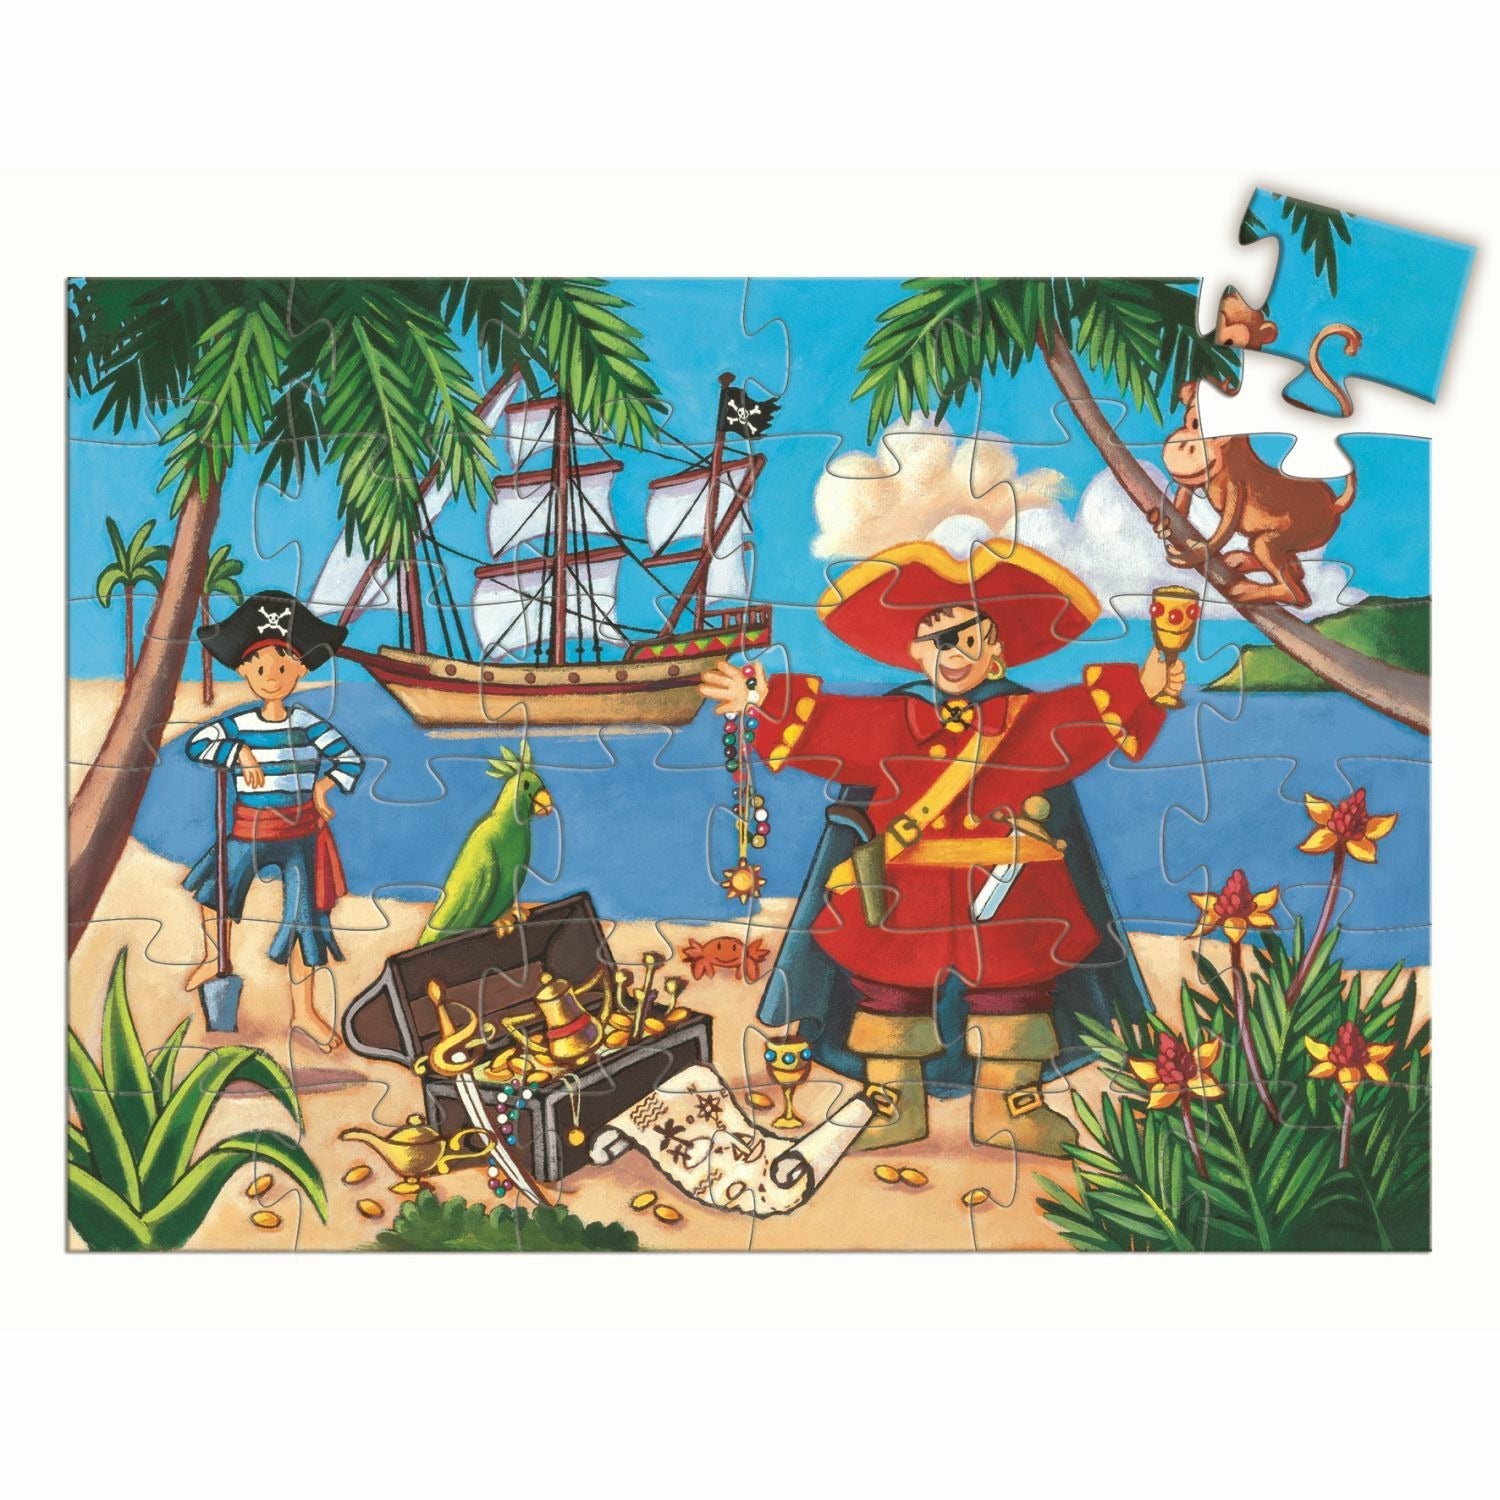 Djeco | Formen Puzzle: The pirate and his treasure - 36 Stk.